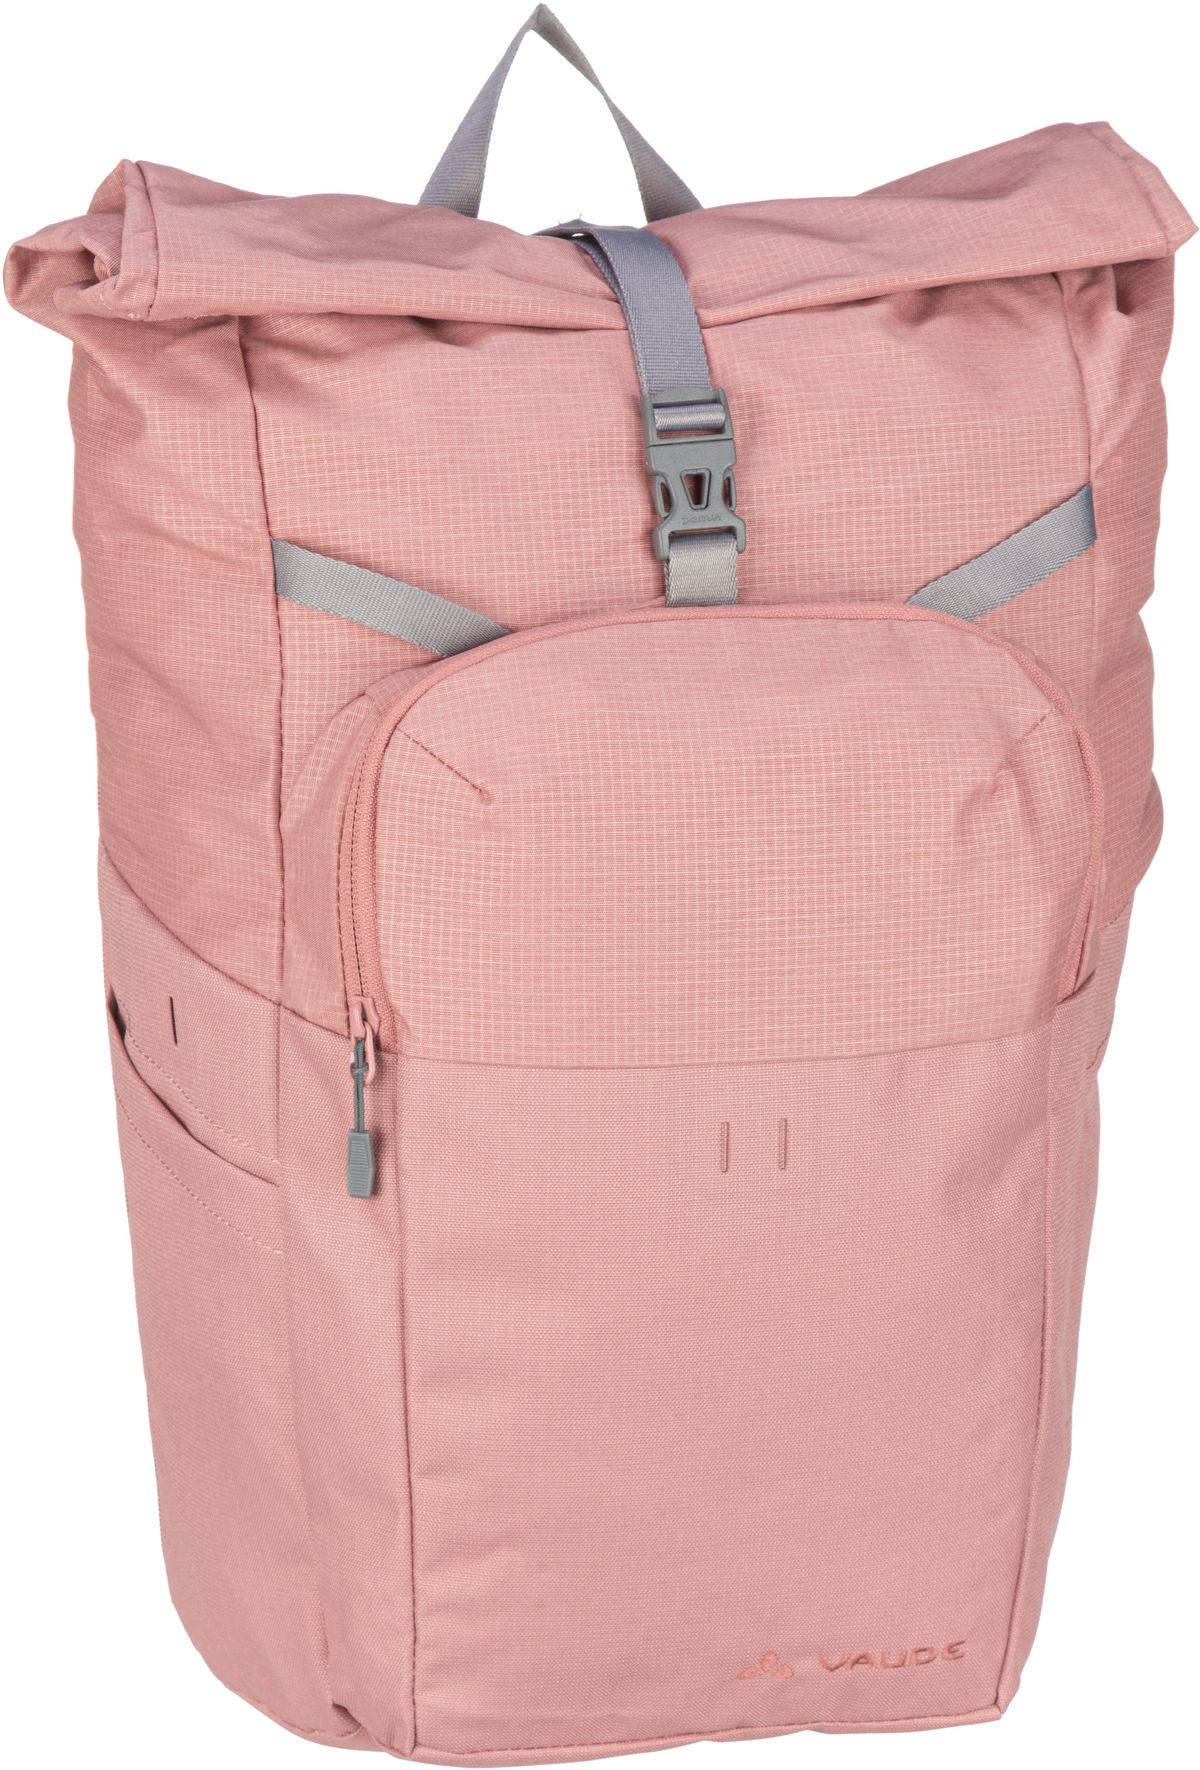 Vaude Okab  in Rosé (25 Liter), Rucksack / Backpack